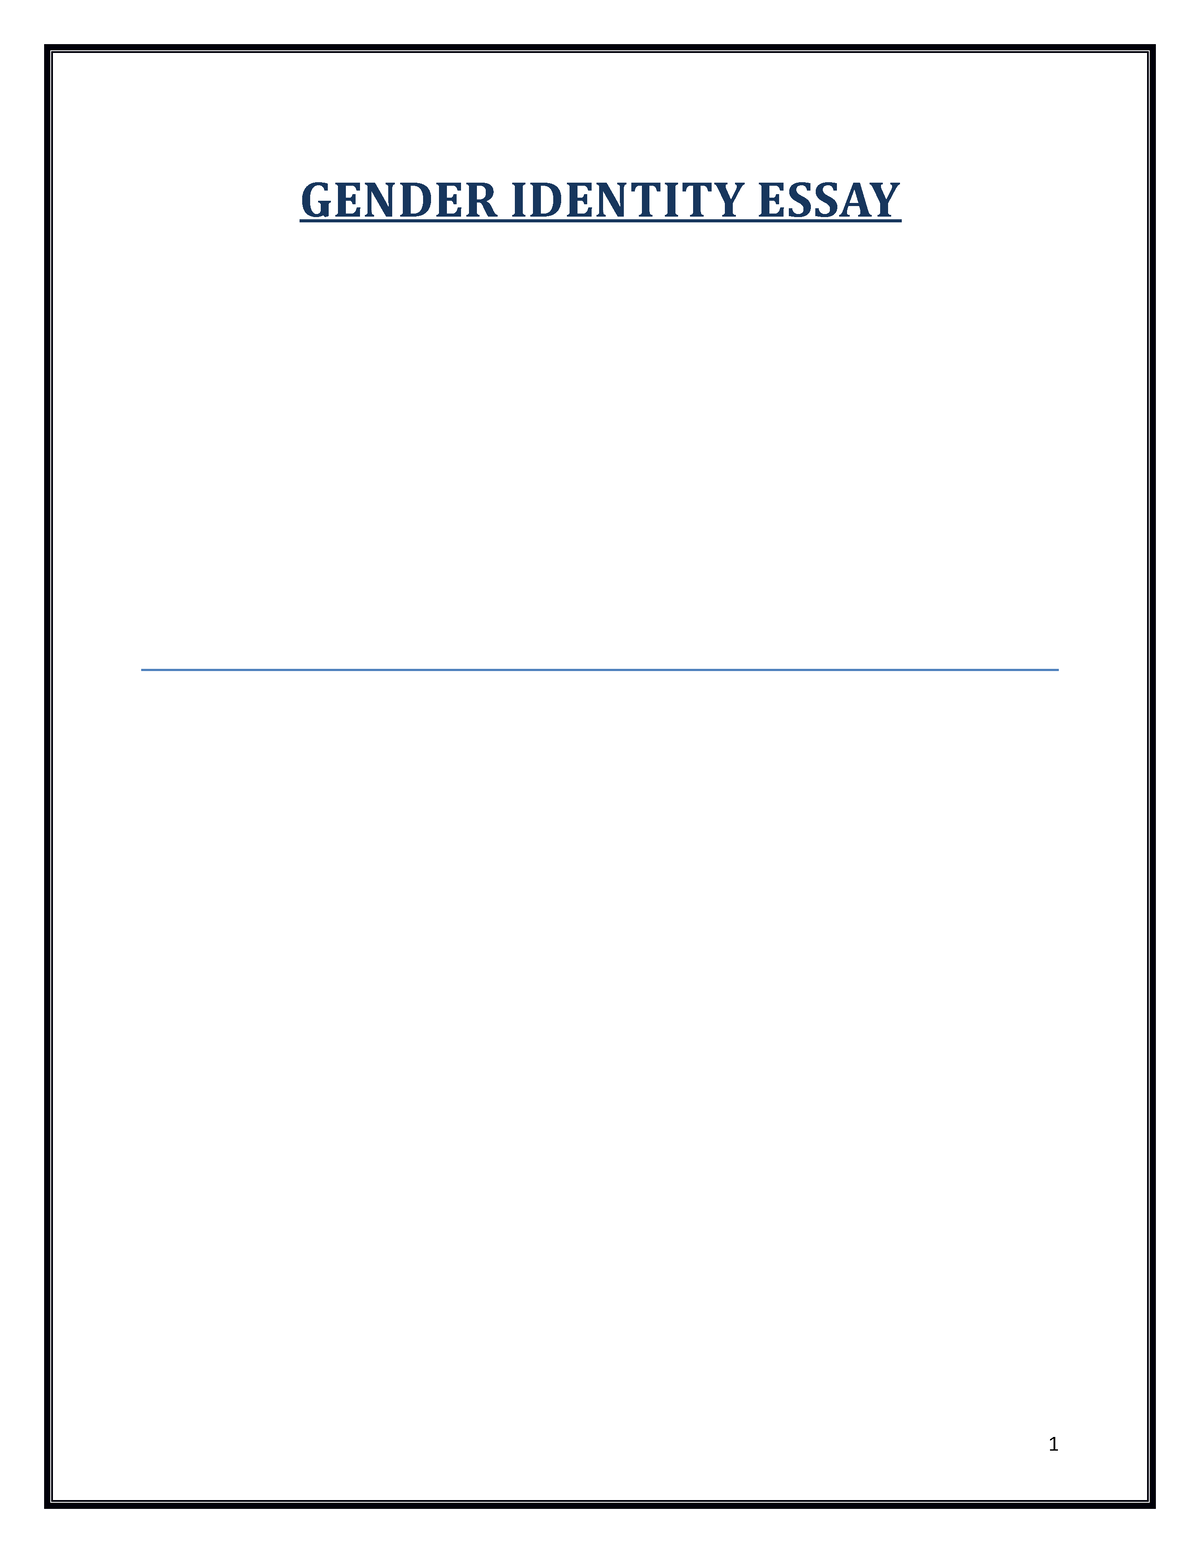 duke gender identity essay